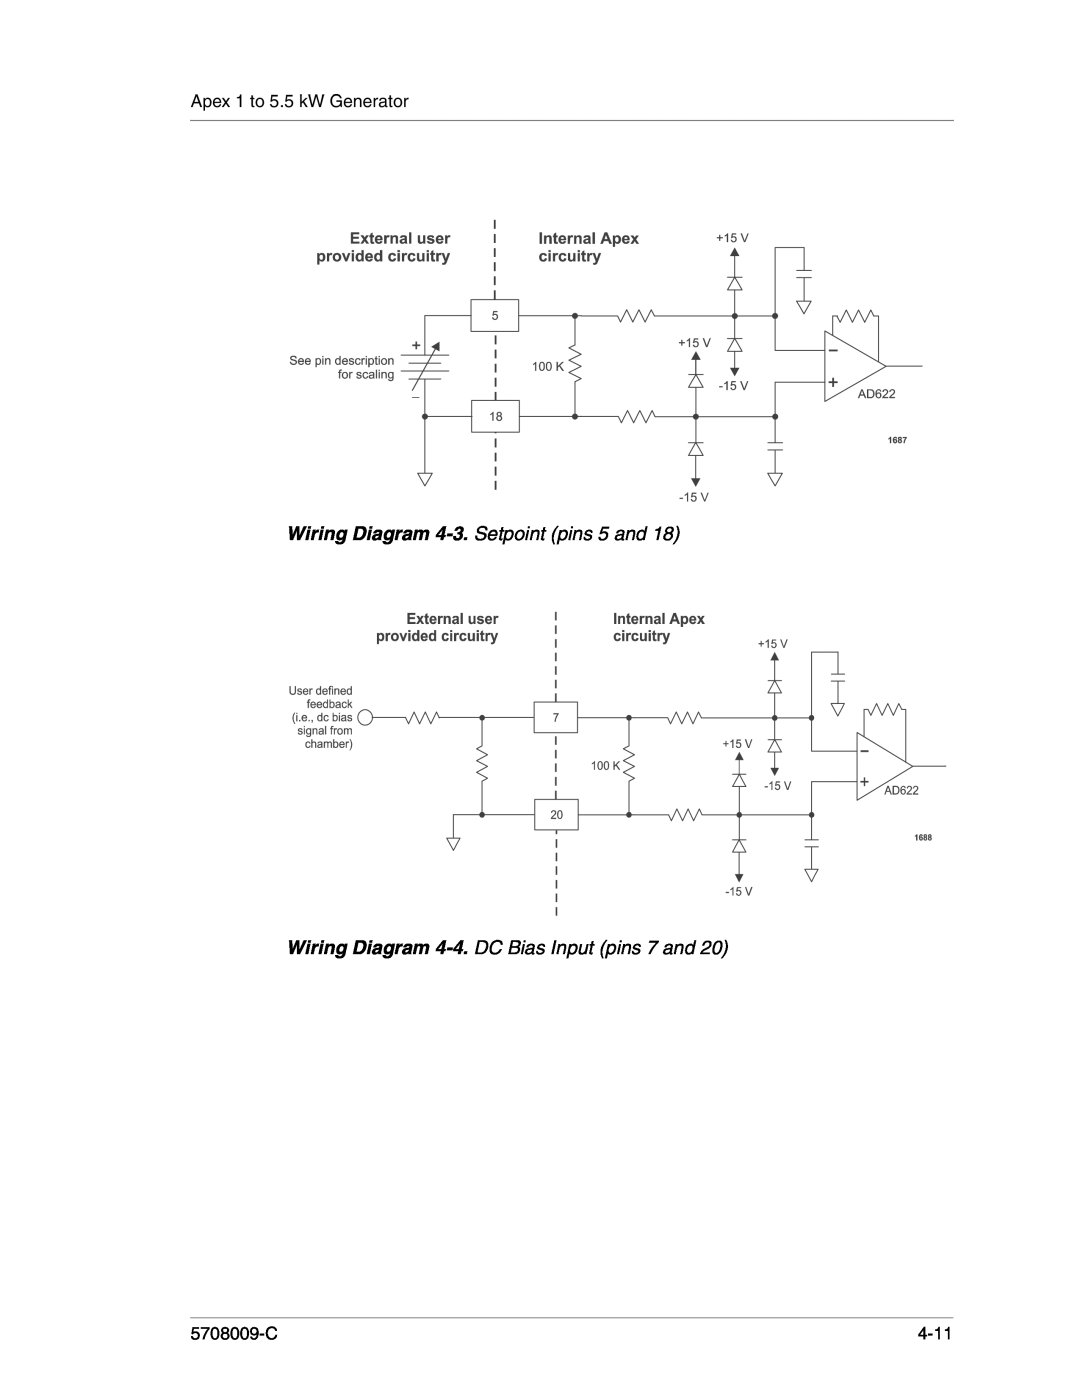 Apex Digital 5708009-C manual Wiring Diagram 4-3. Setpoint pins 5 and, Wiring Diagram 4-4. DC Bias Input pins 7 and, 4-11 